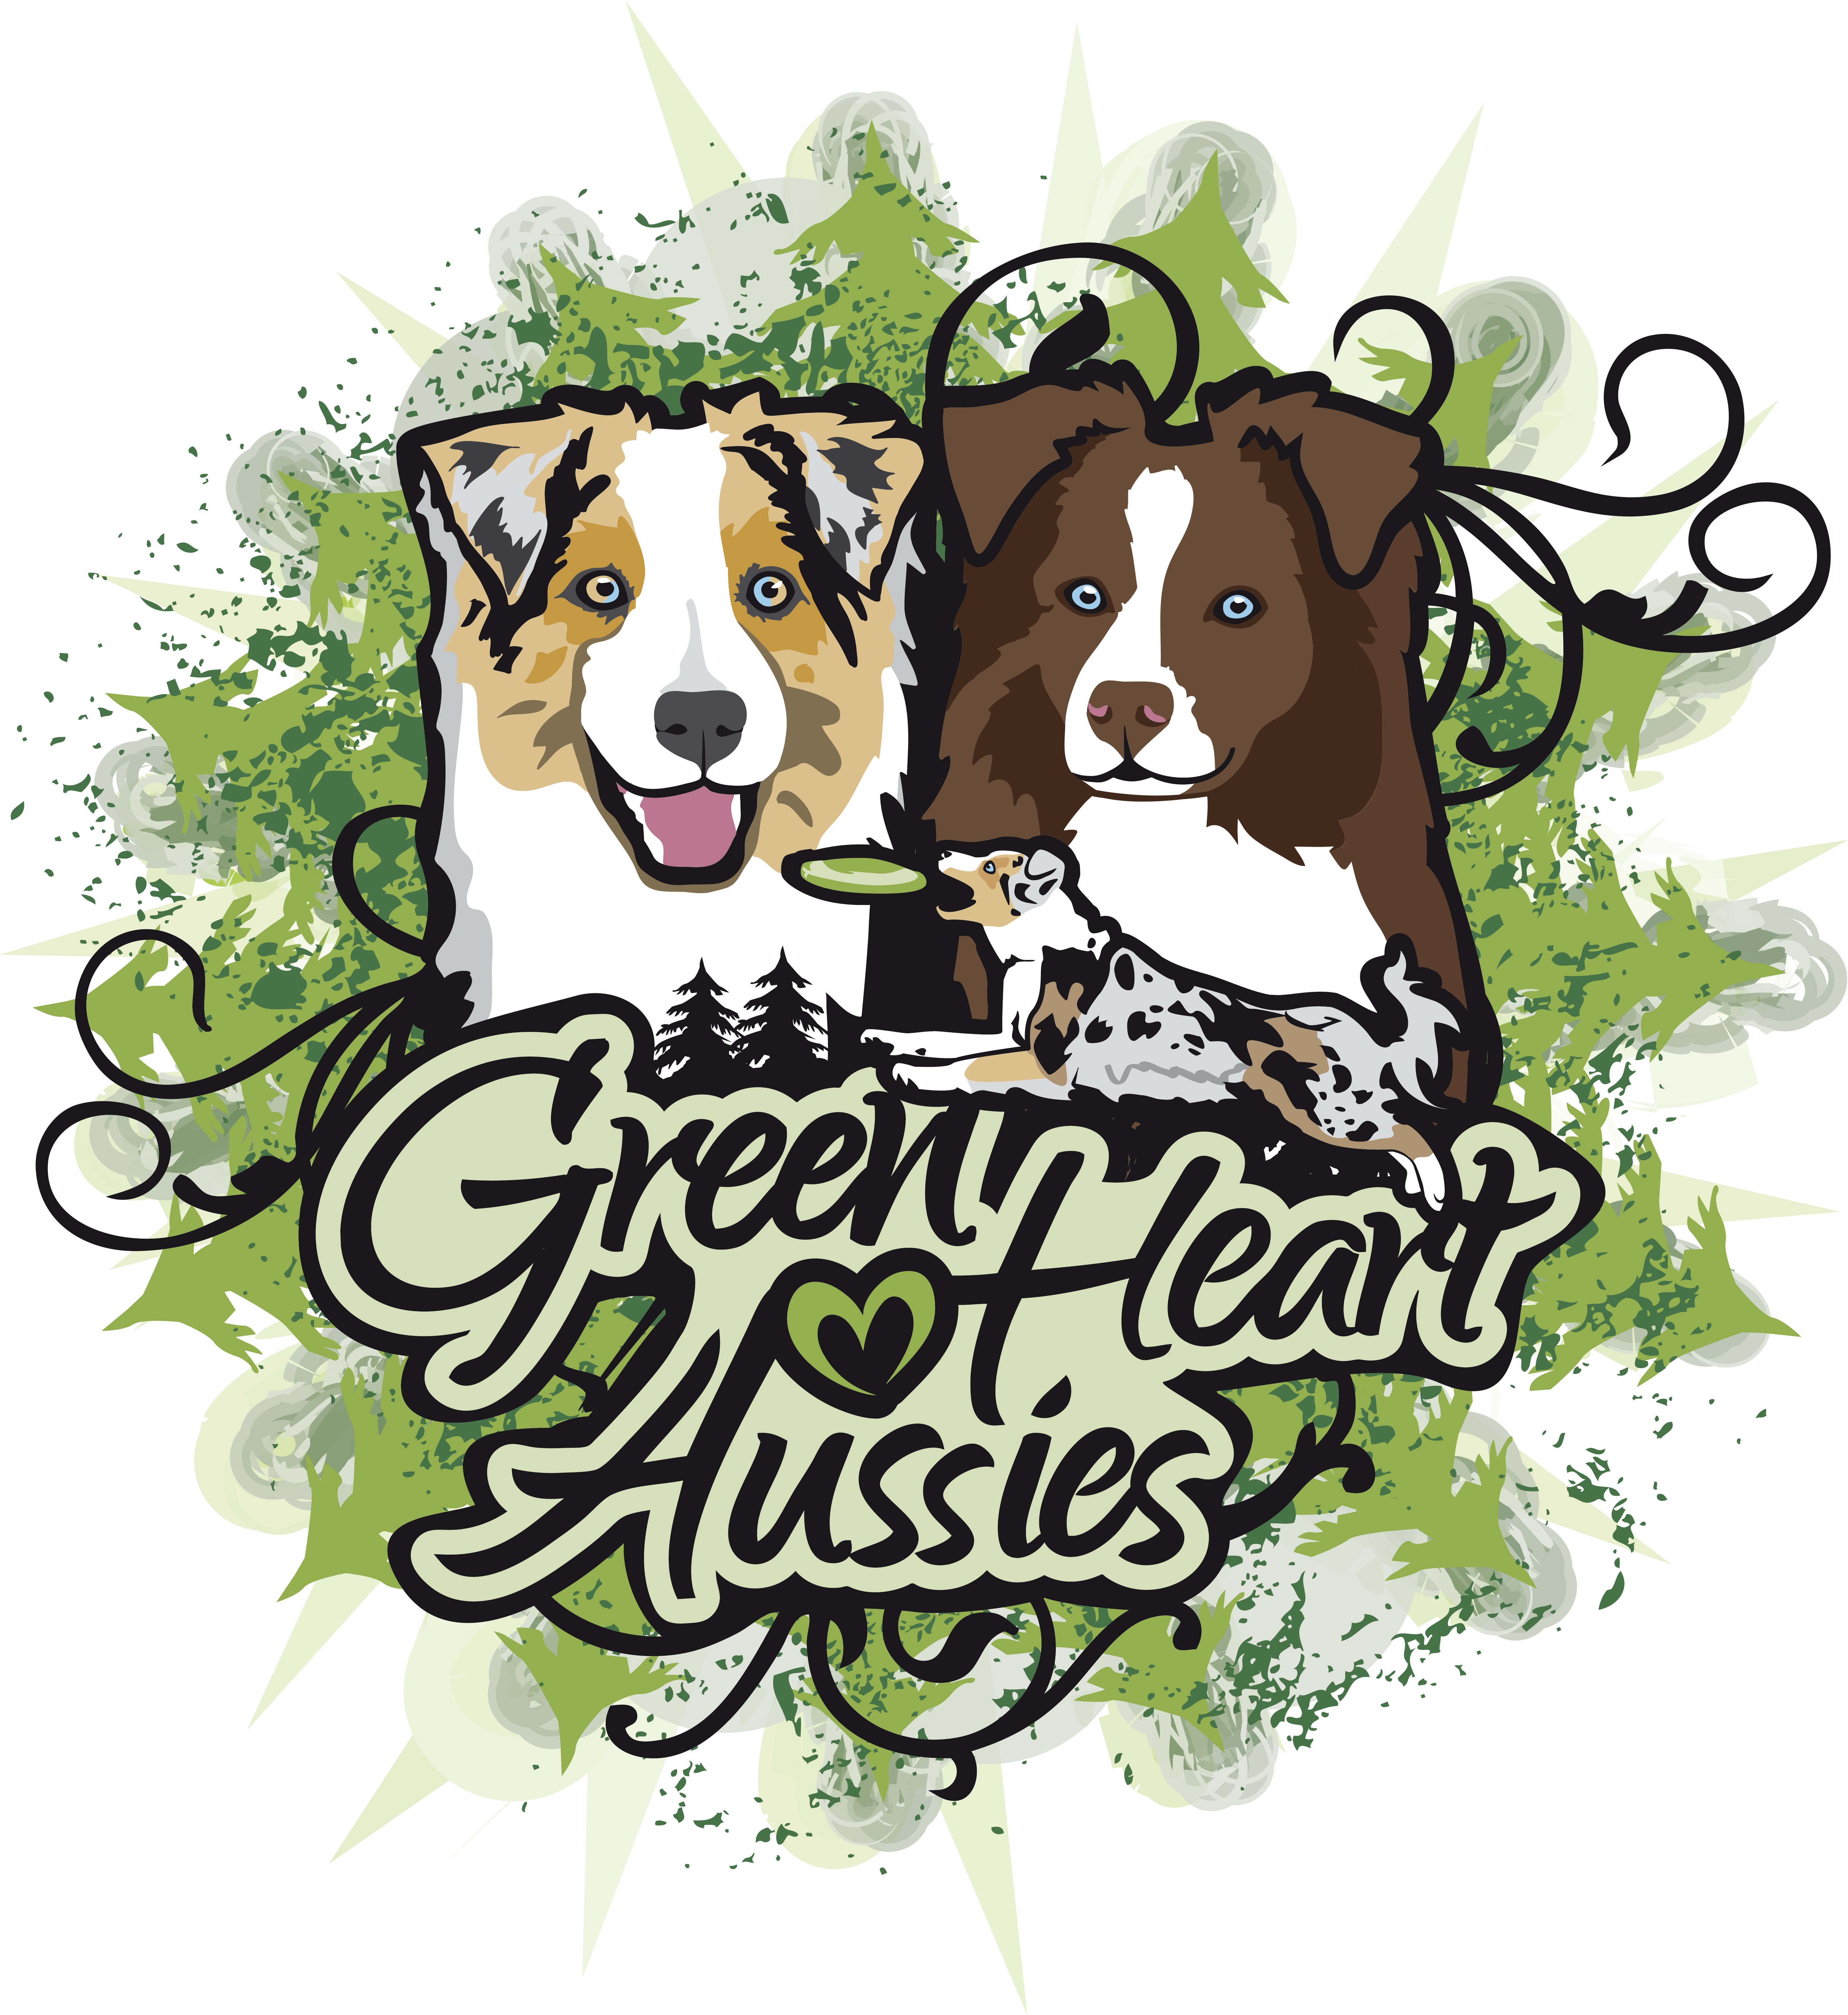 Willkommen bei den Greenheart Aussies